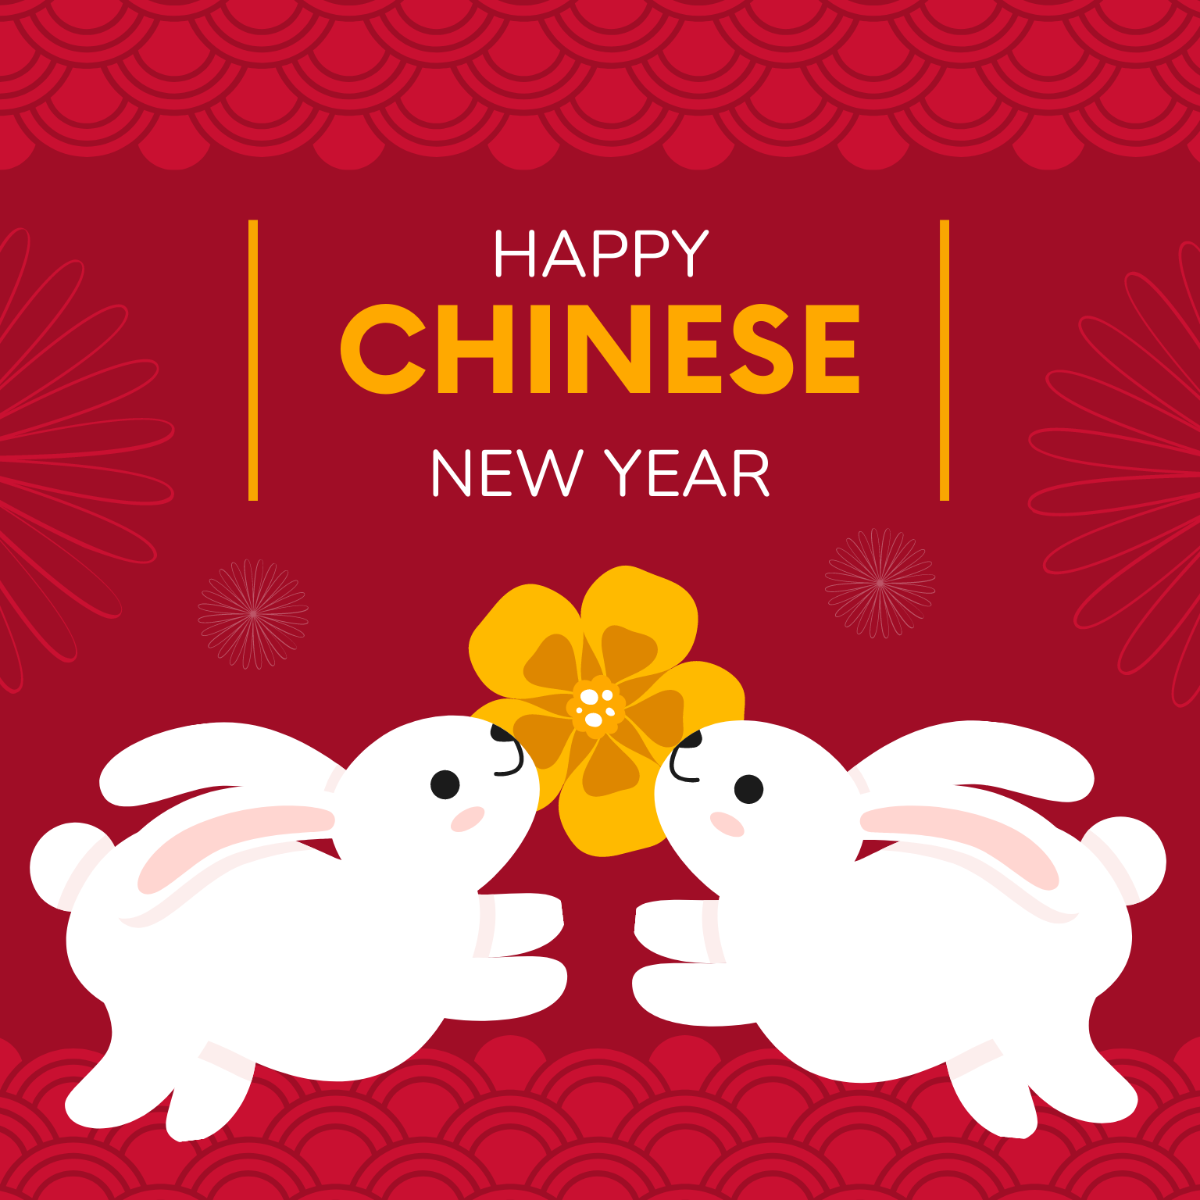 Happy Chinese New Year Illustration